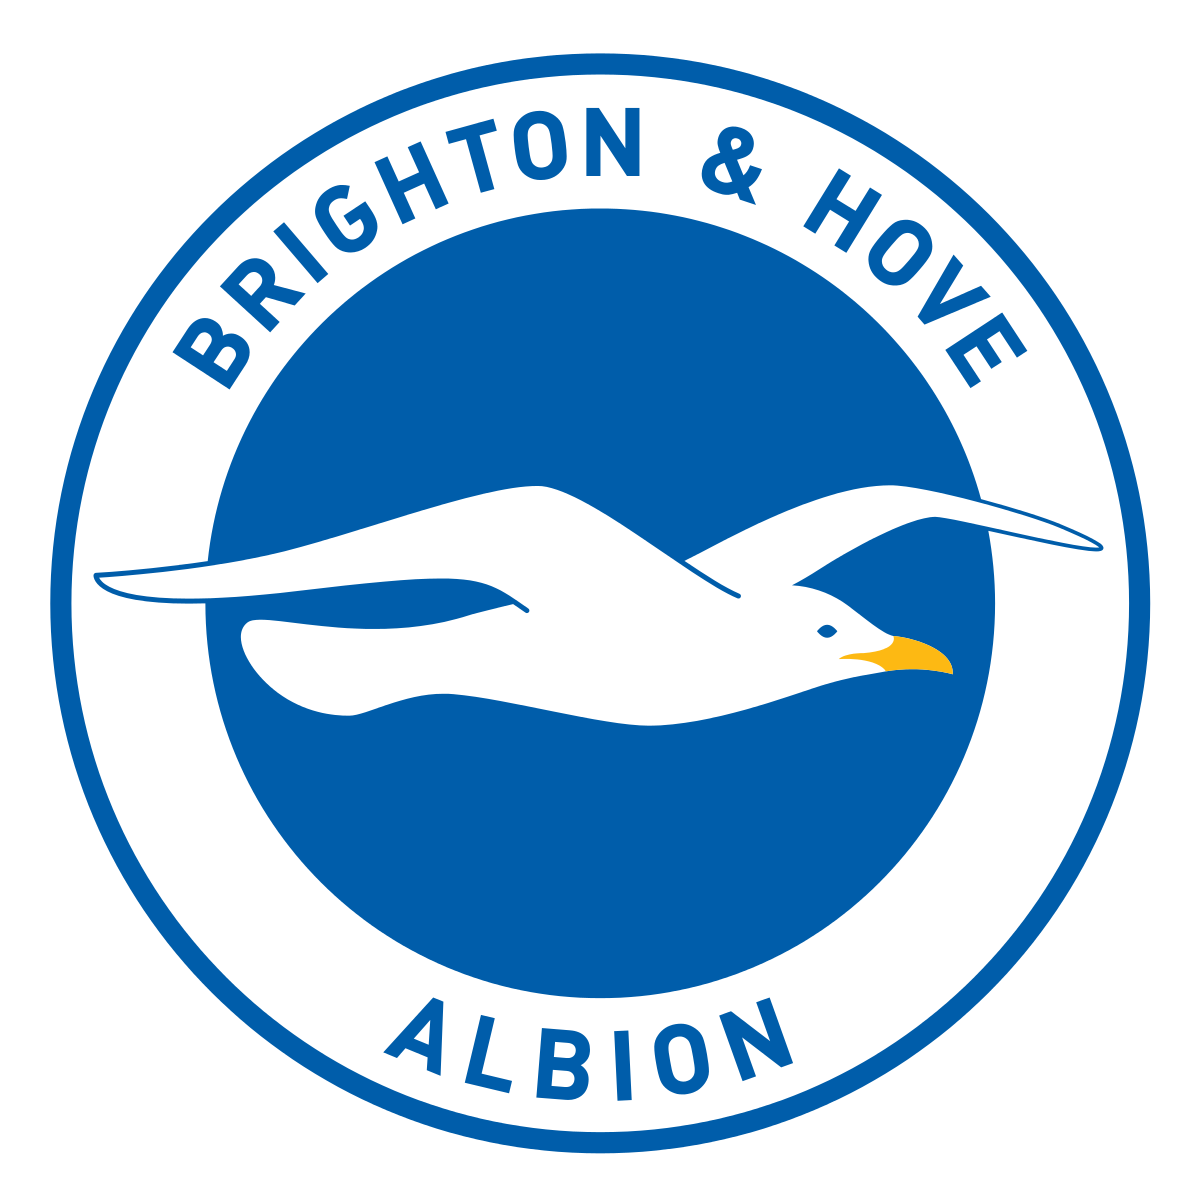 Brighton (w) team logo